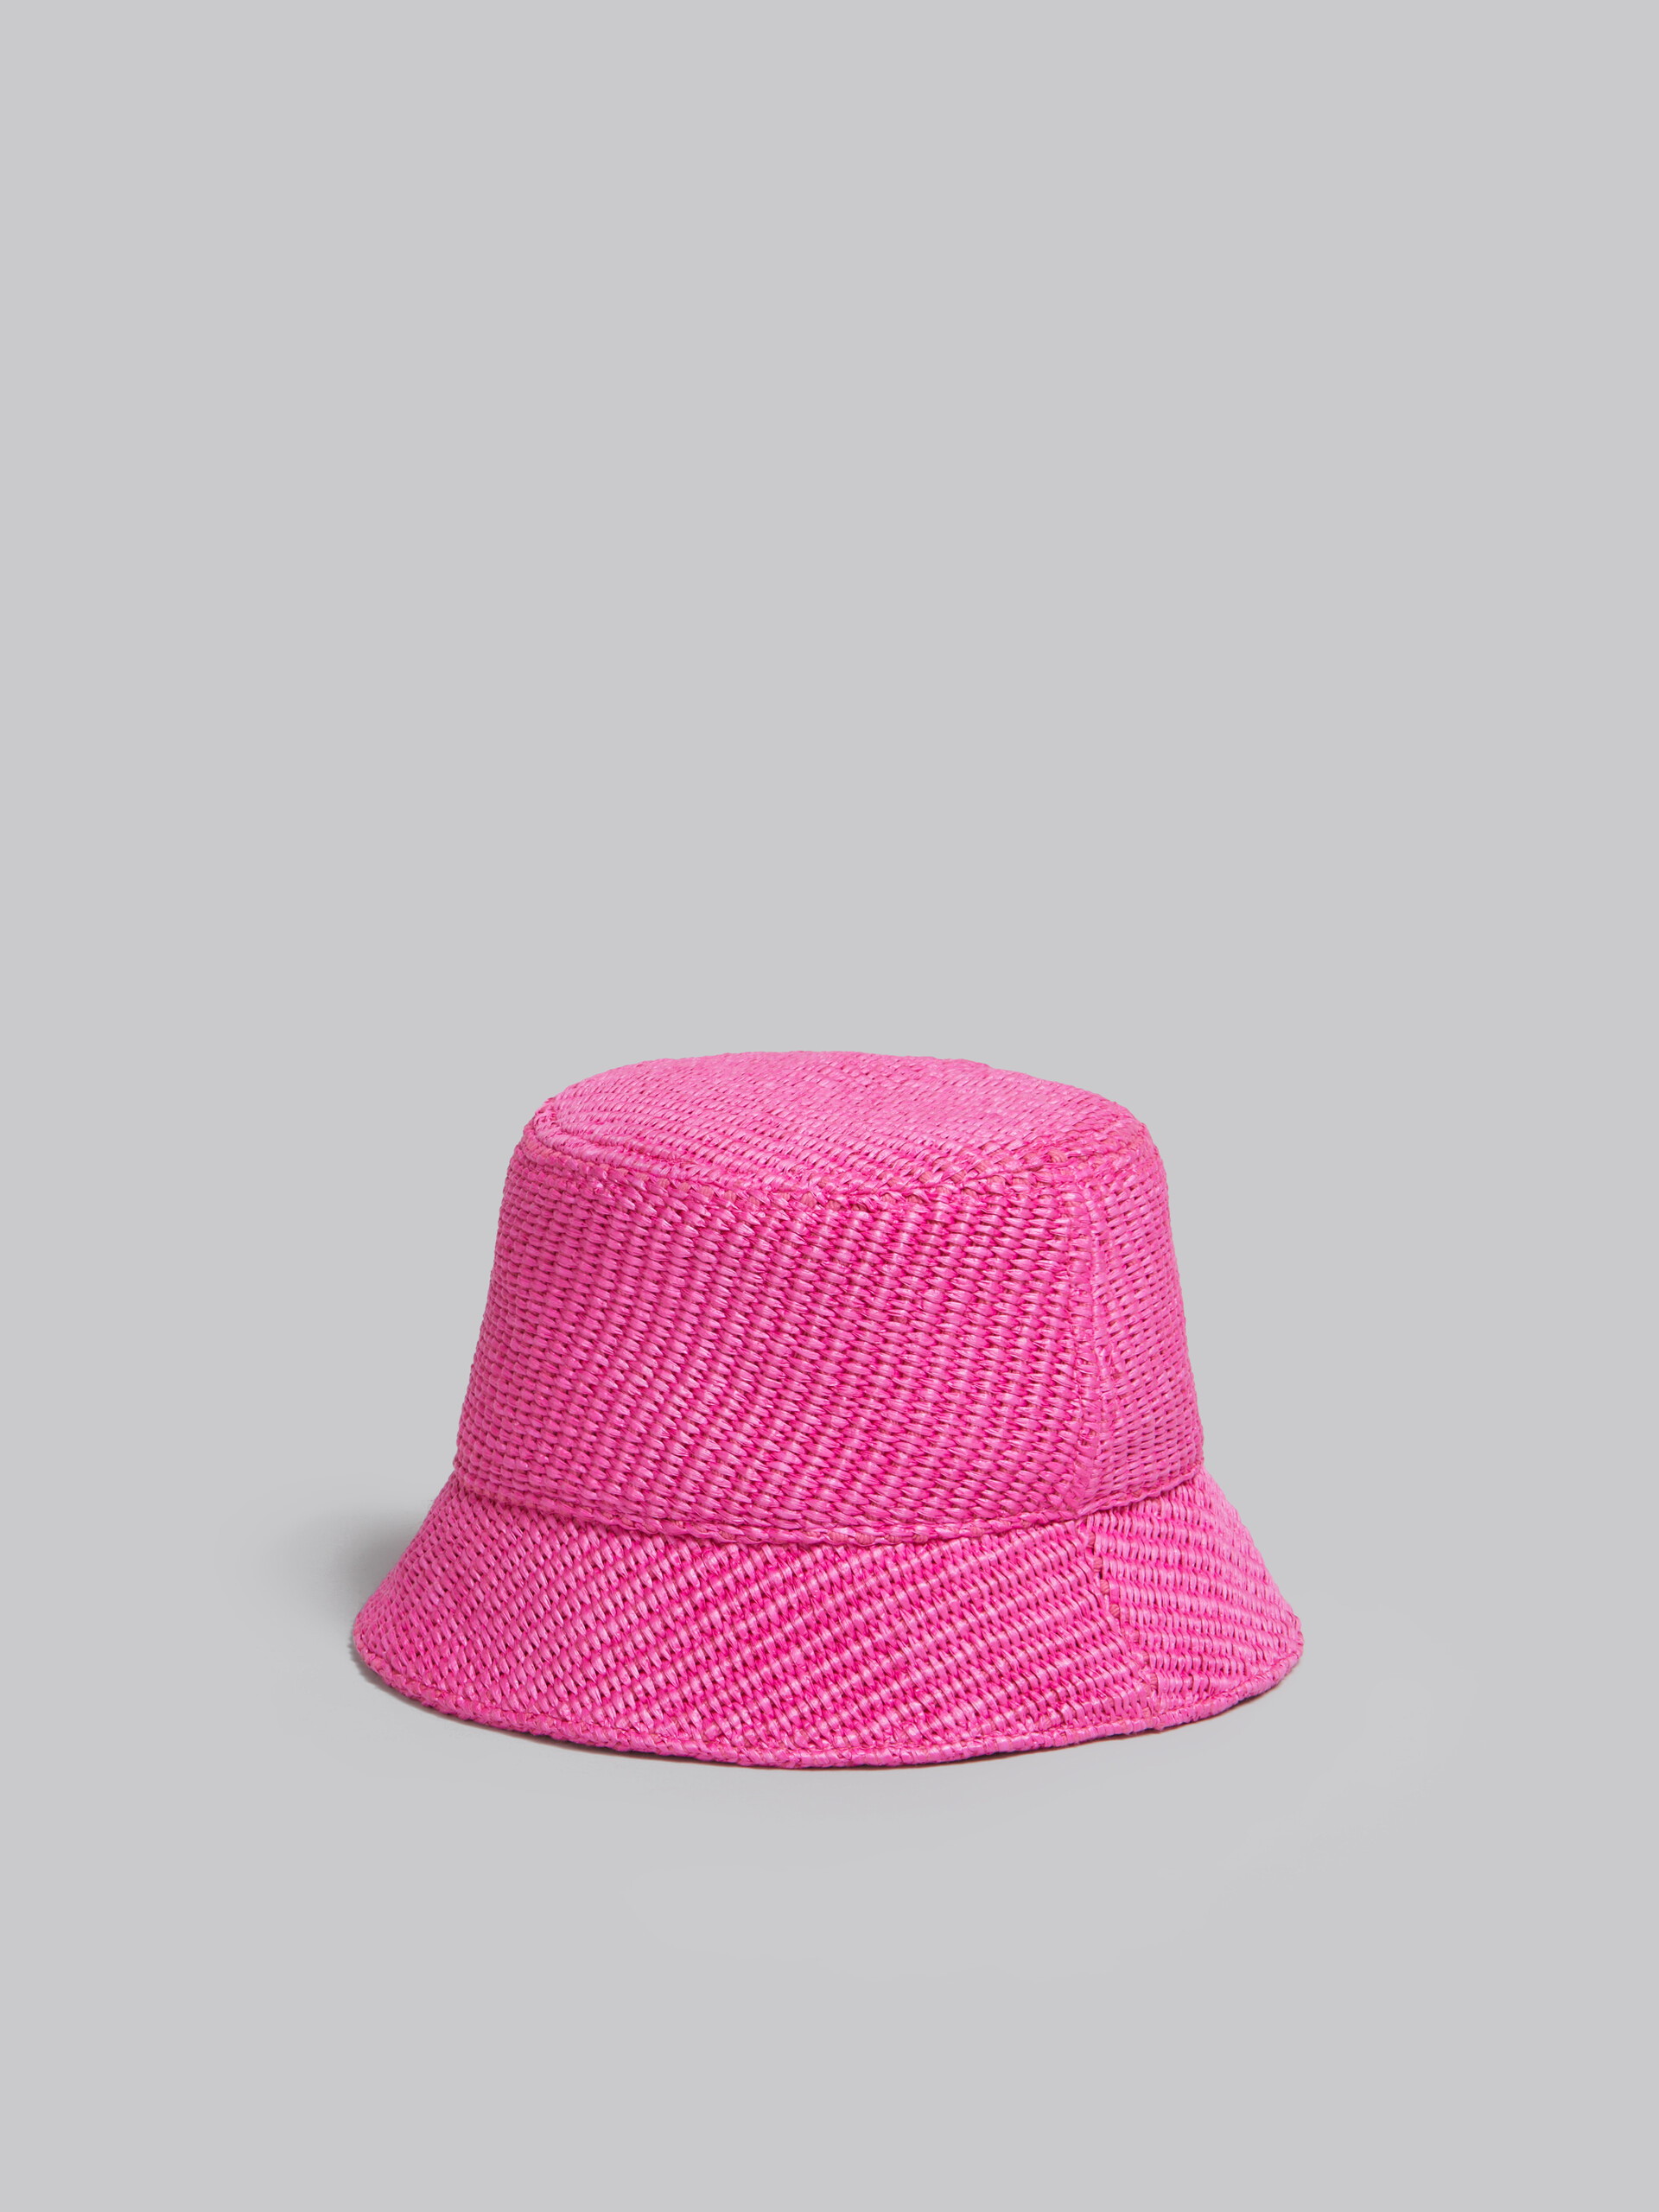 Marni x No Vacancy Inn - Fuchsia hat in raffia fabric - Hats - Image 3